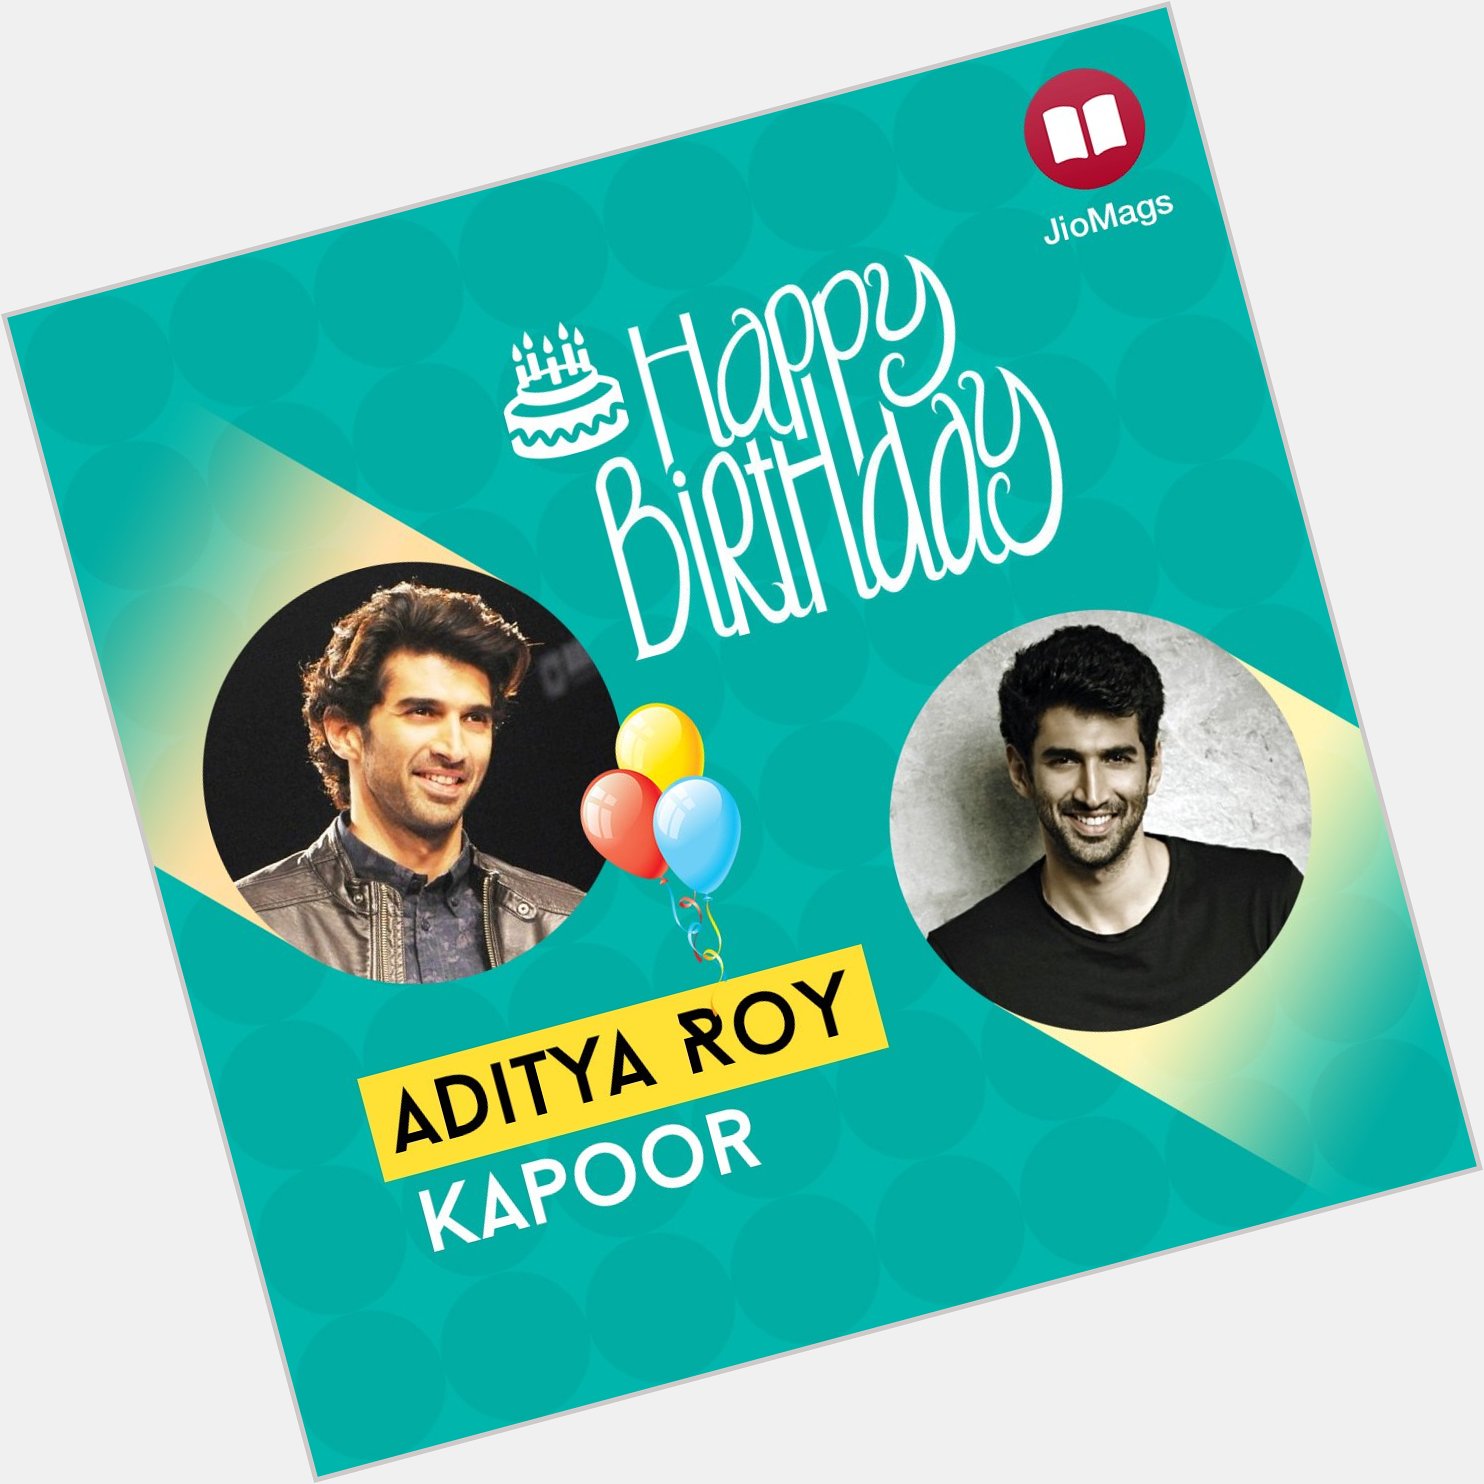 Wishing Aditya Roy Kapur a very Happy Birthday! 